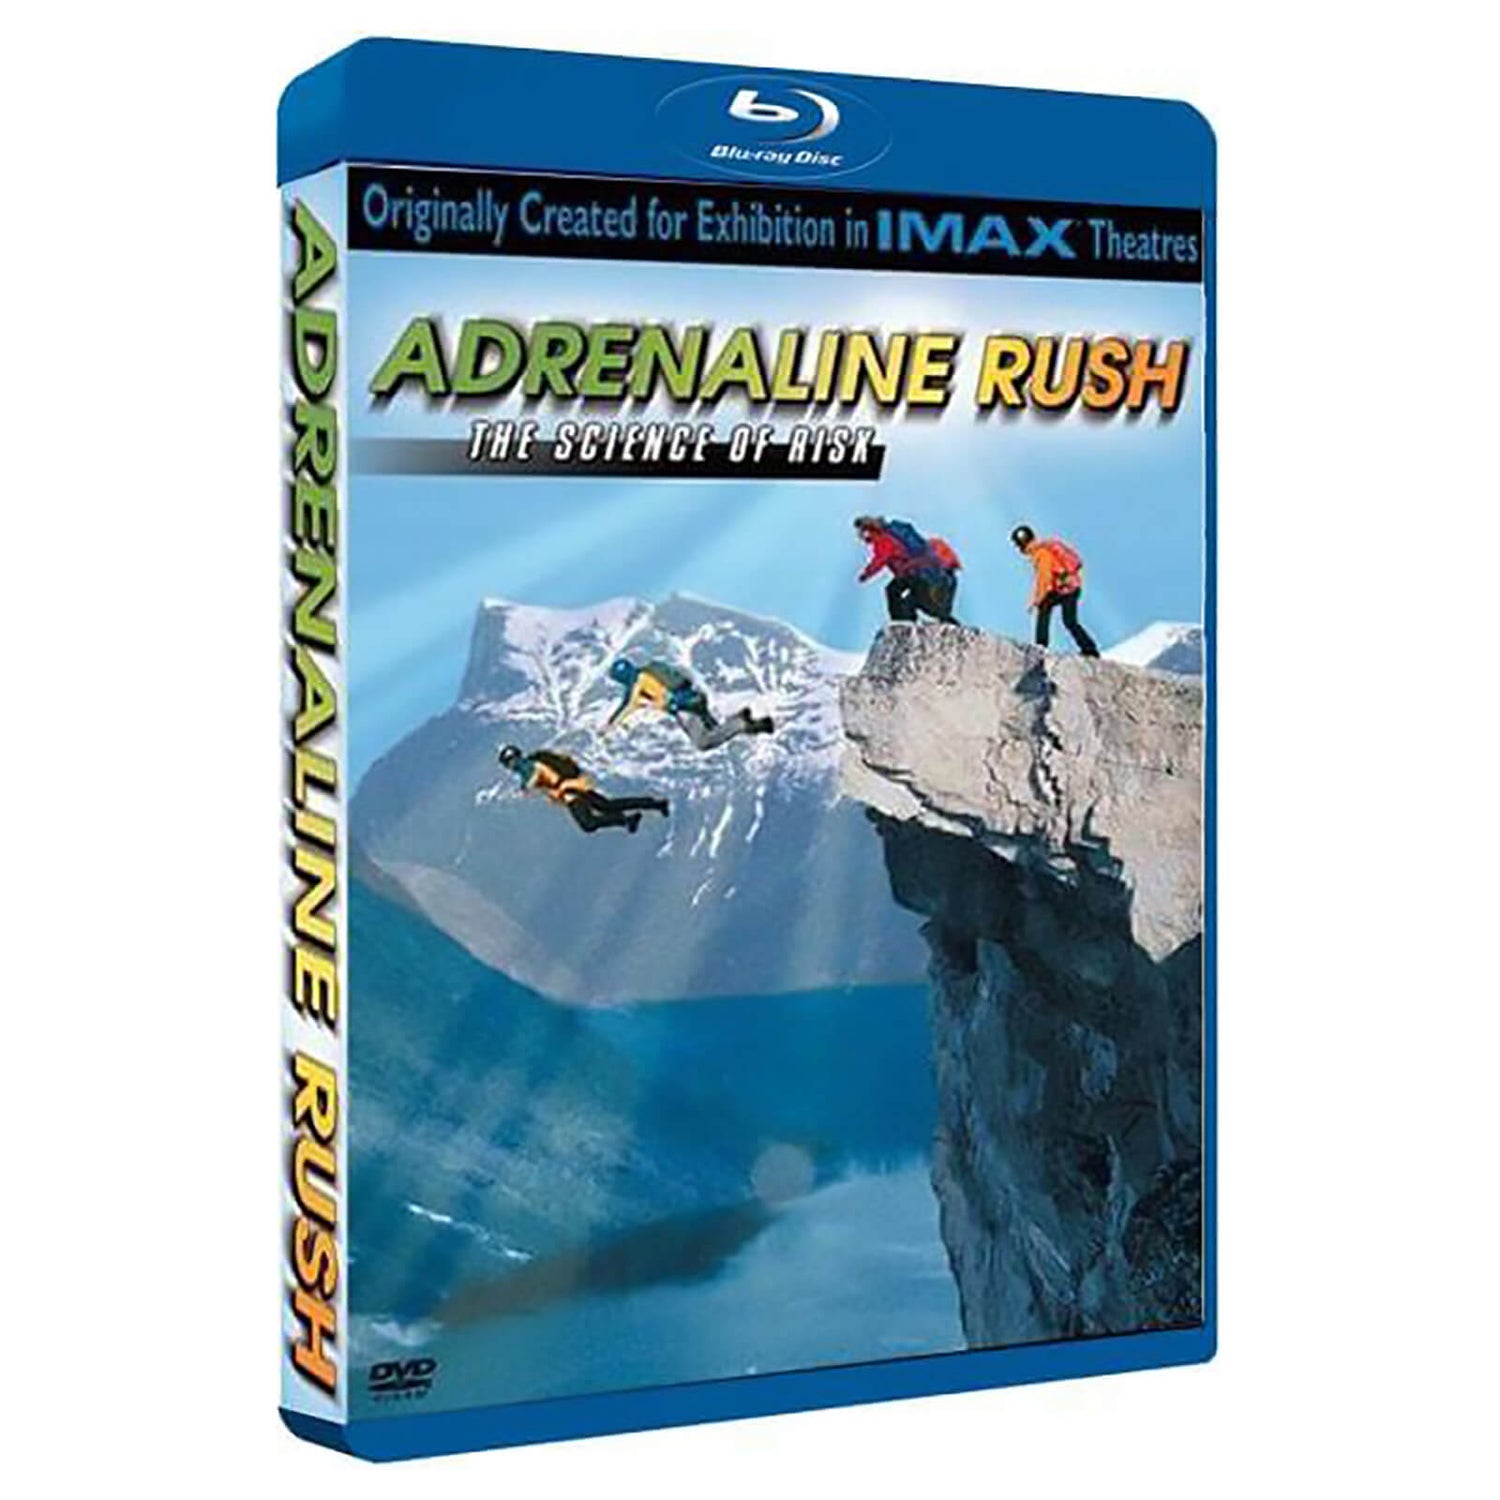 Adrenaline Rush- Science Of Risk